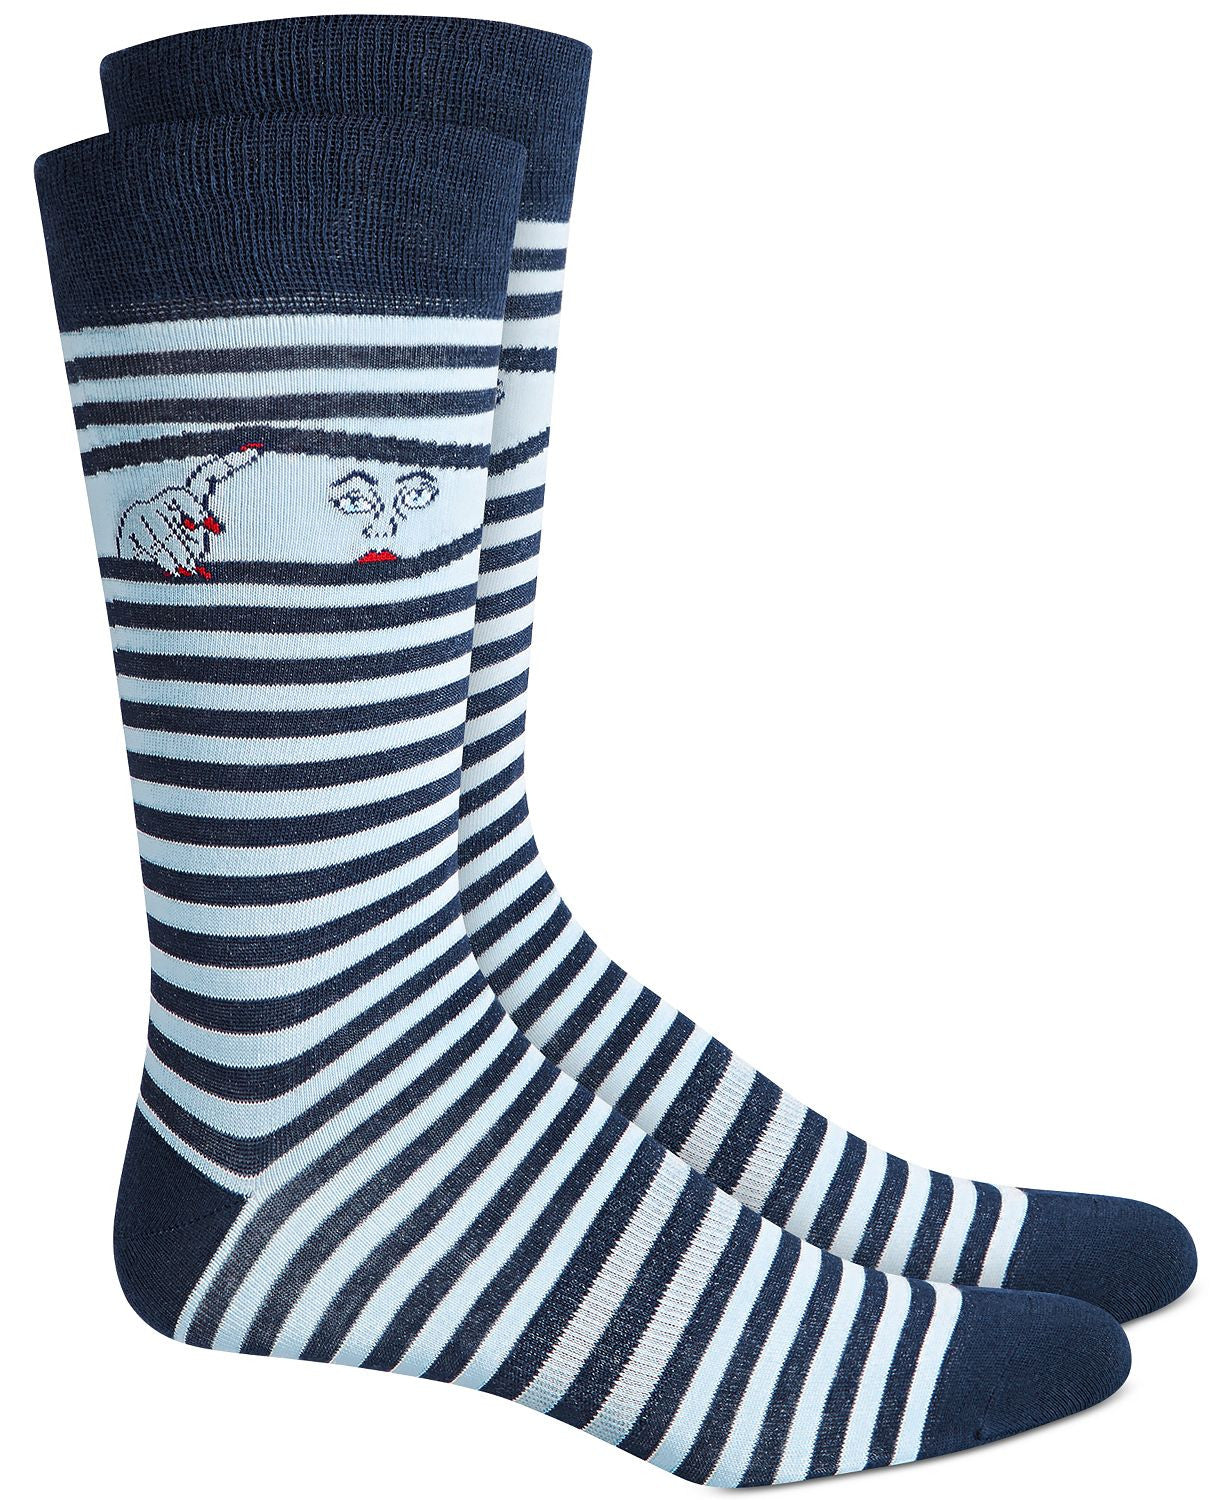 BAR III Peek a Boo Striped Socks Navy Blue